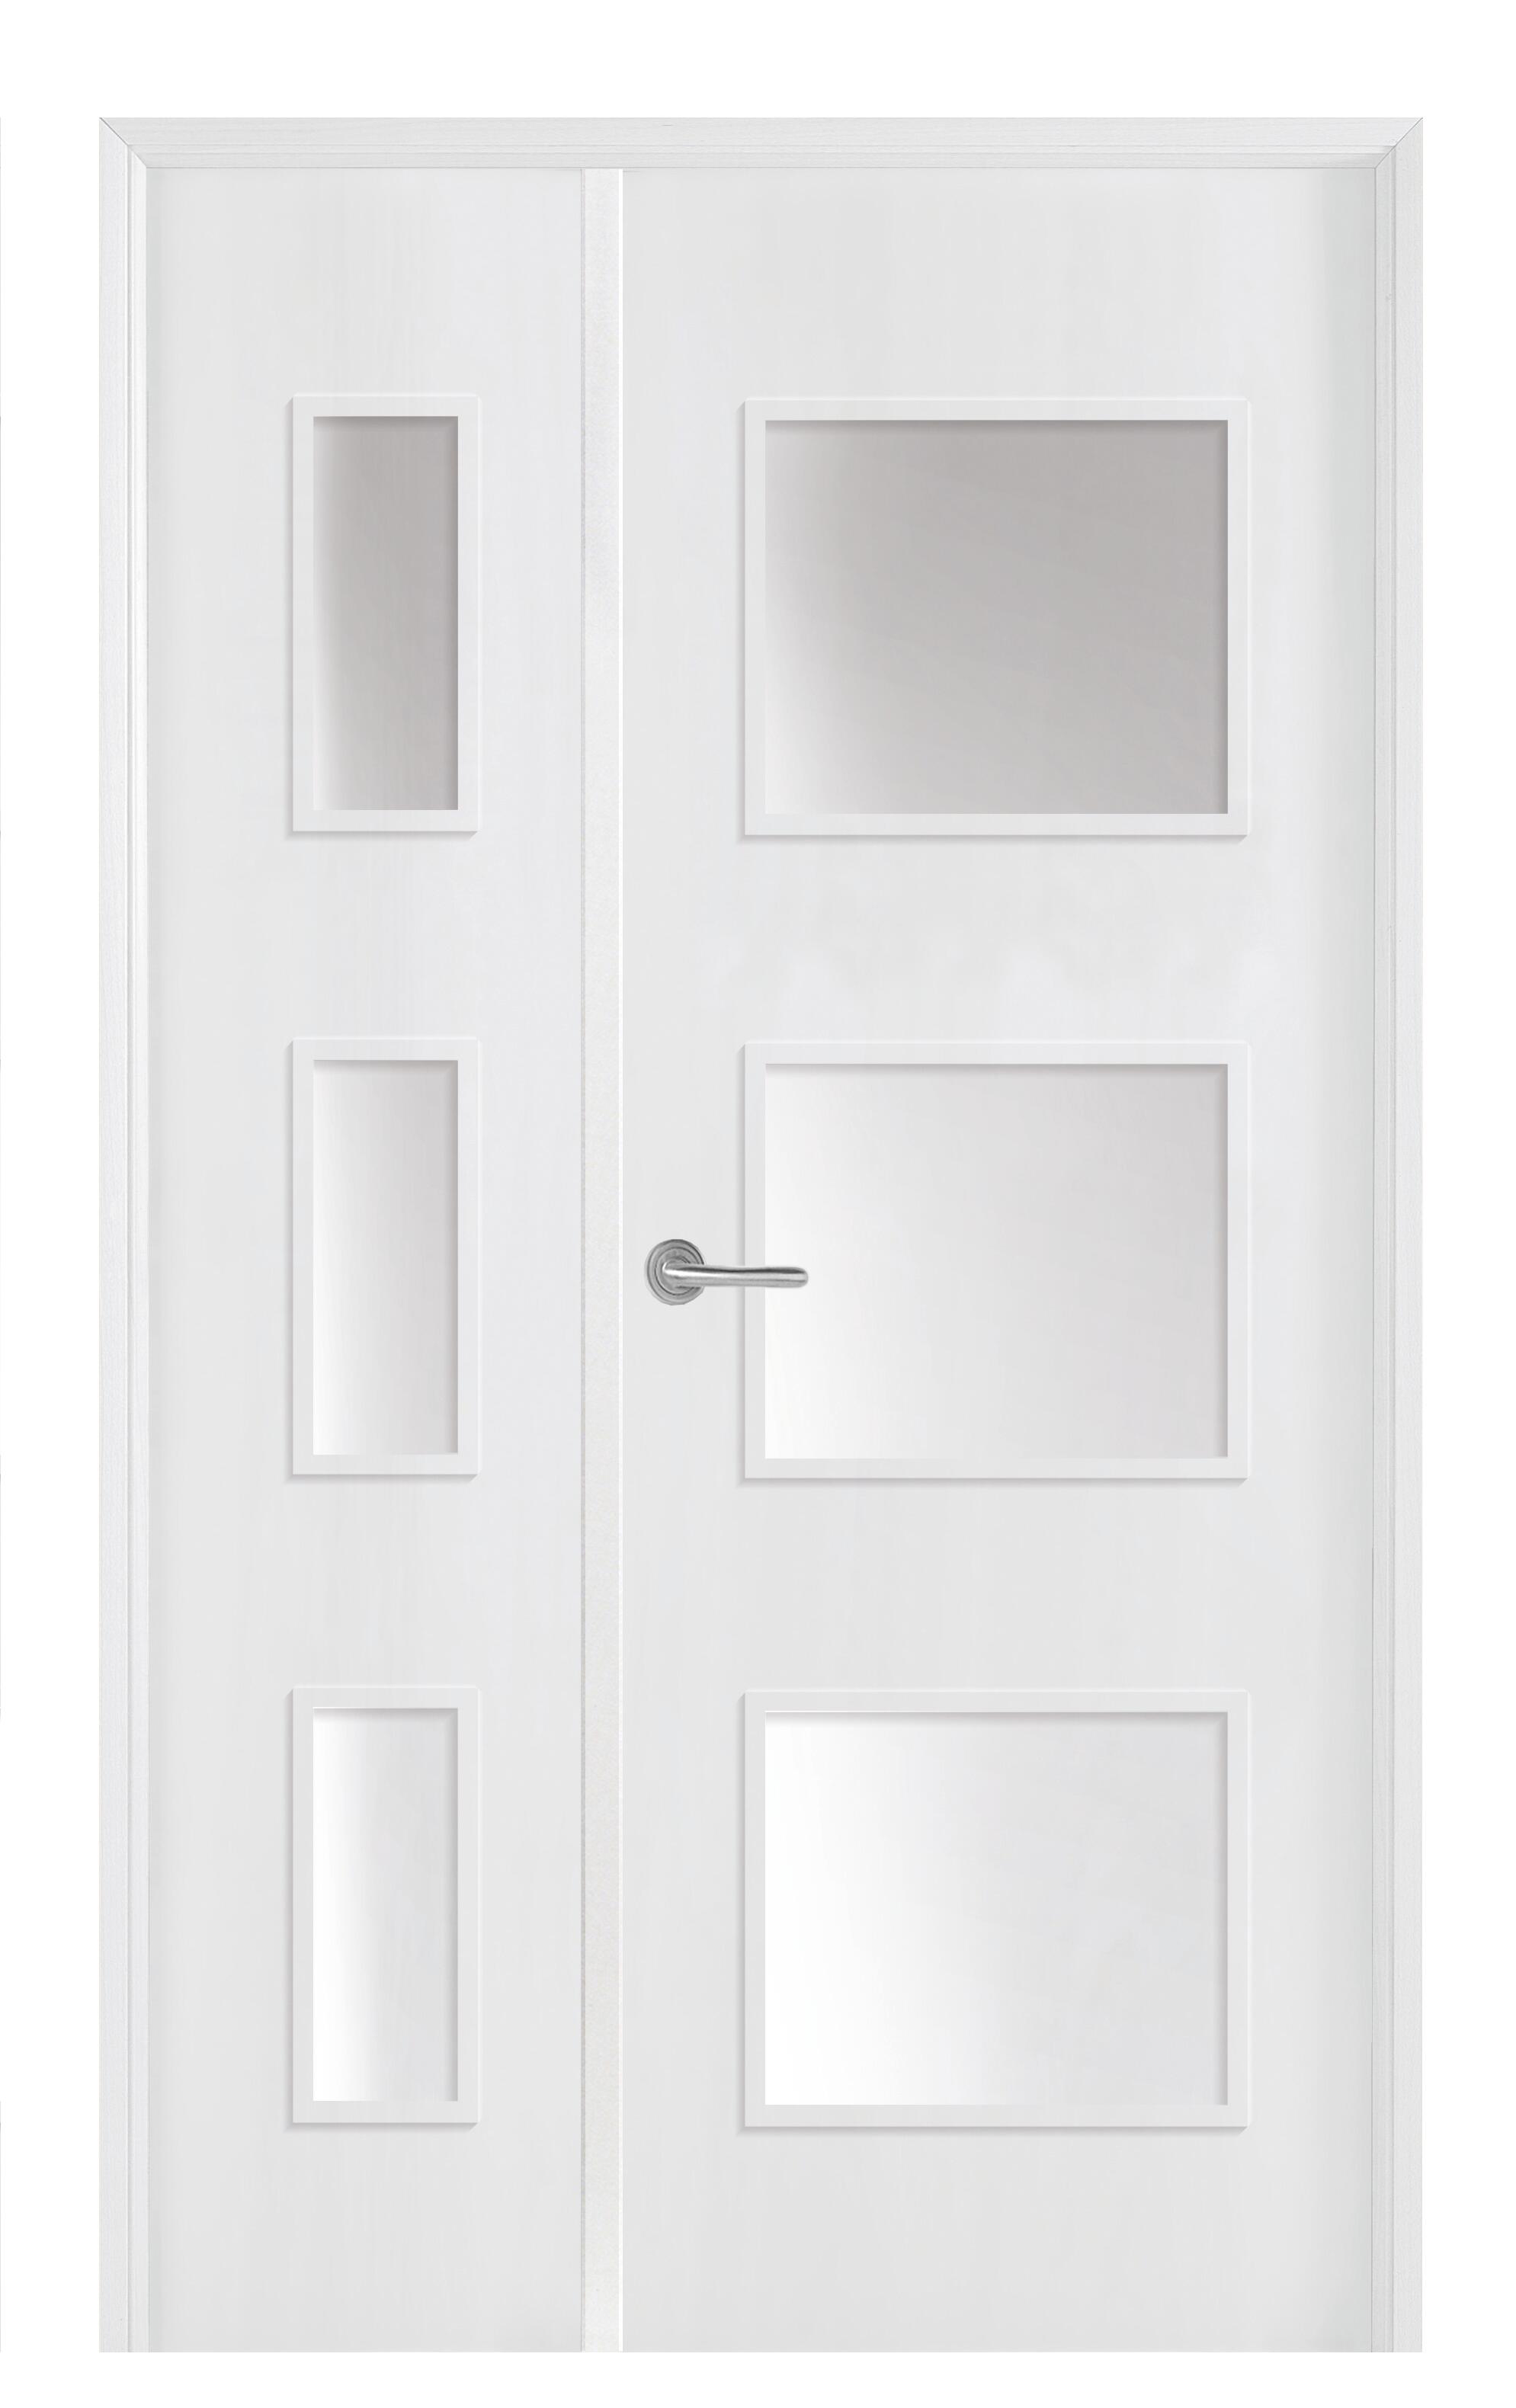 Puerta doble con cristal bari plus blanca 9x2x105cm d